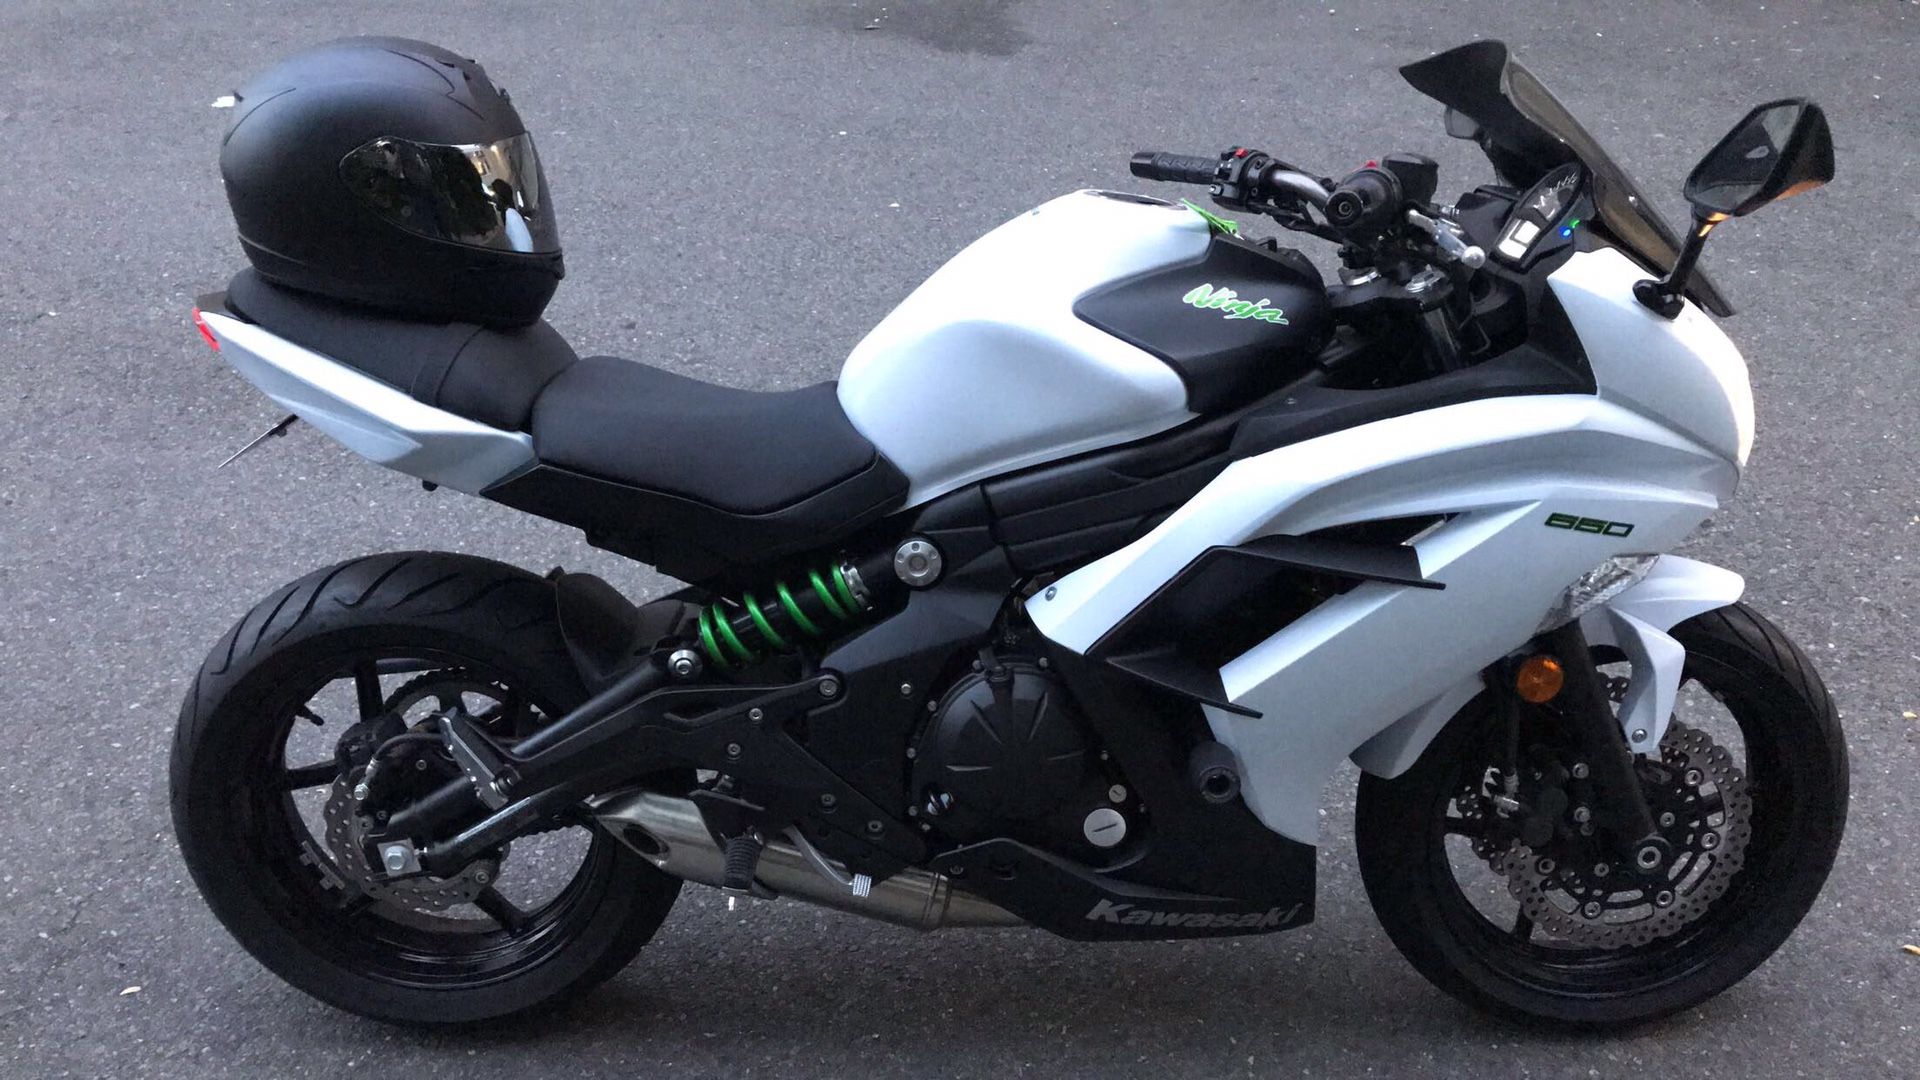 Almost NEW 300 Miles 2015 Ninja Kawasaki 650